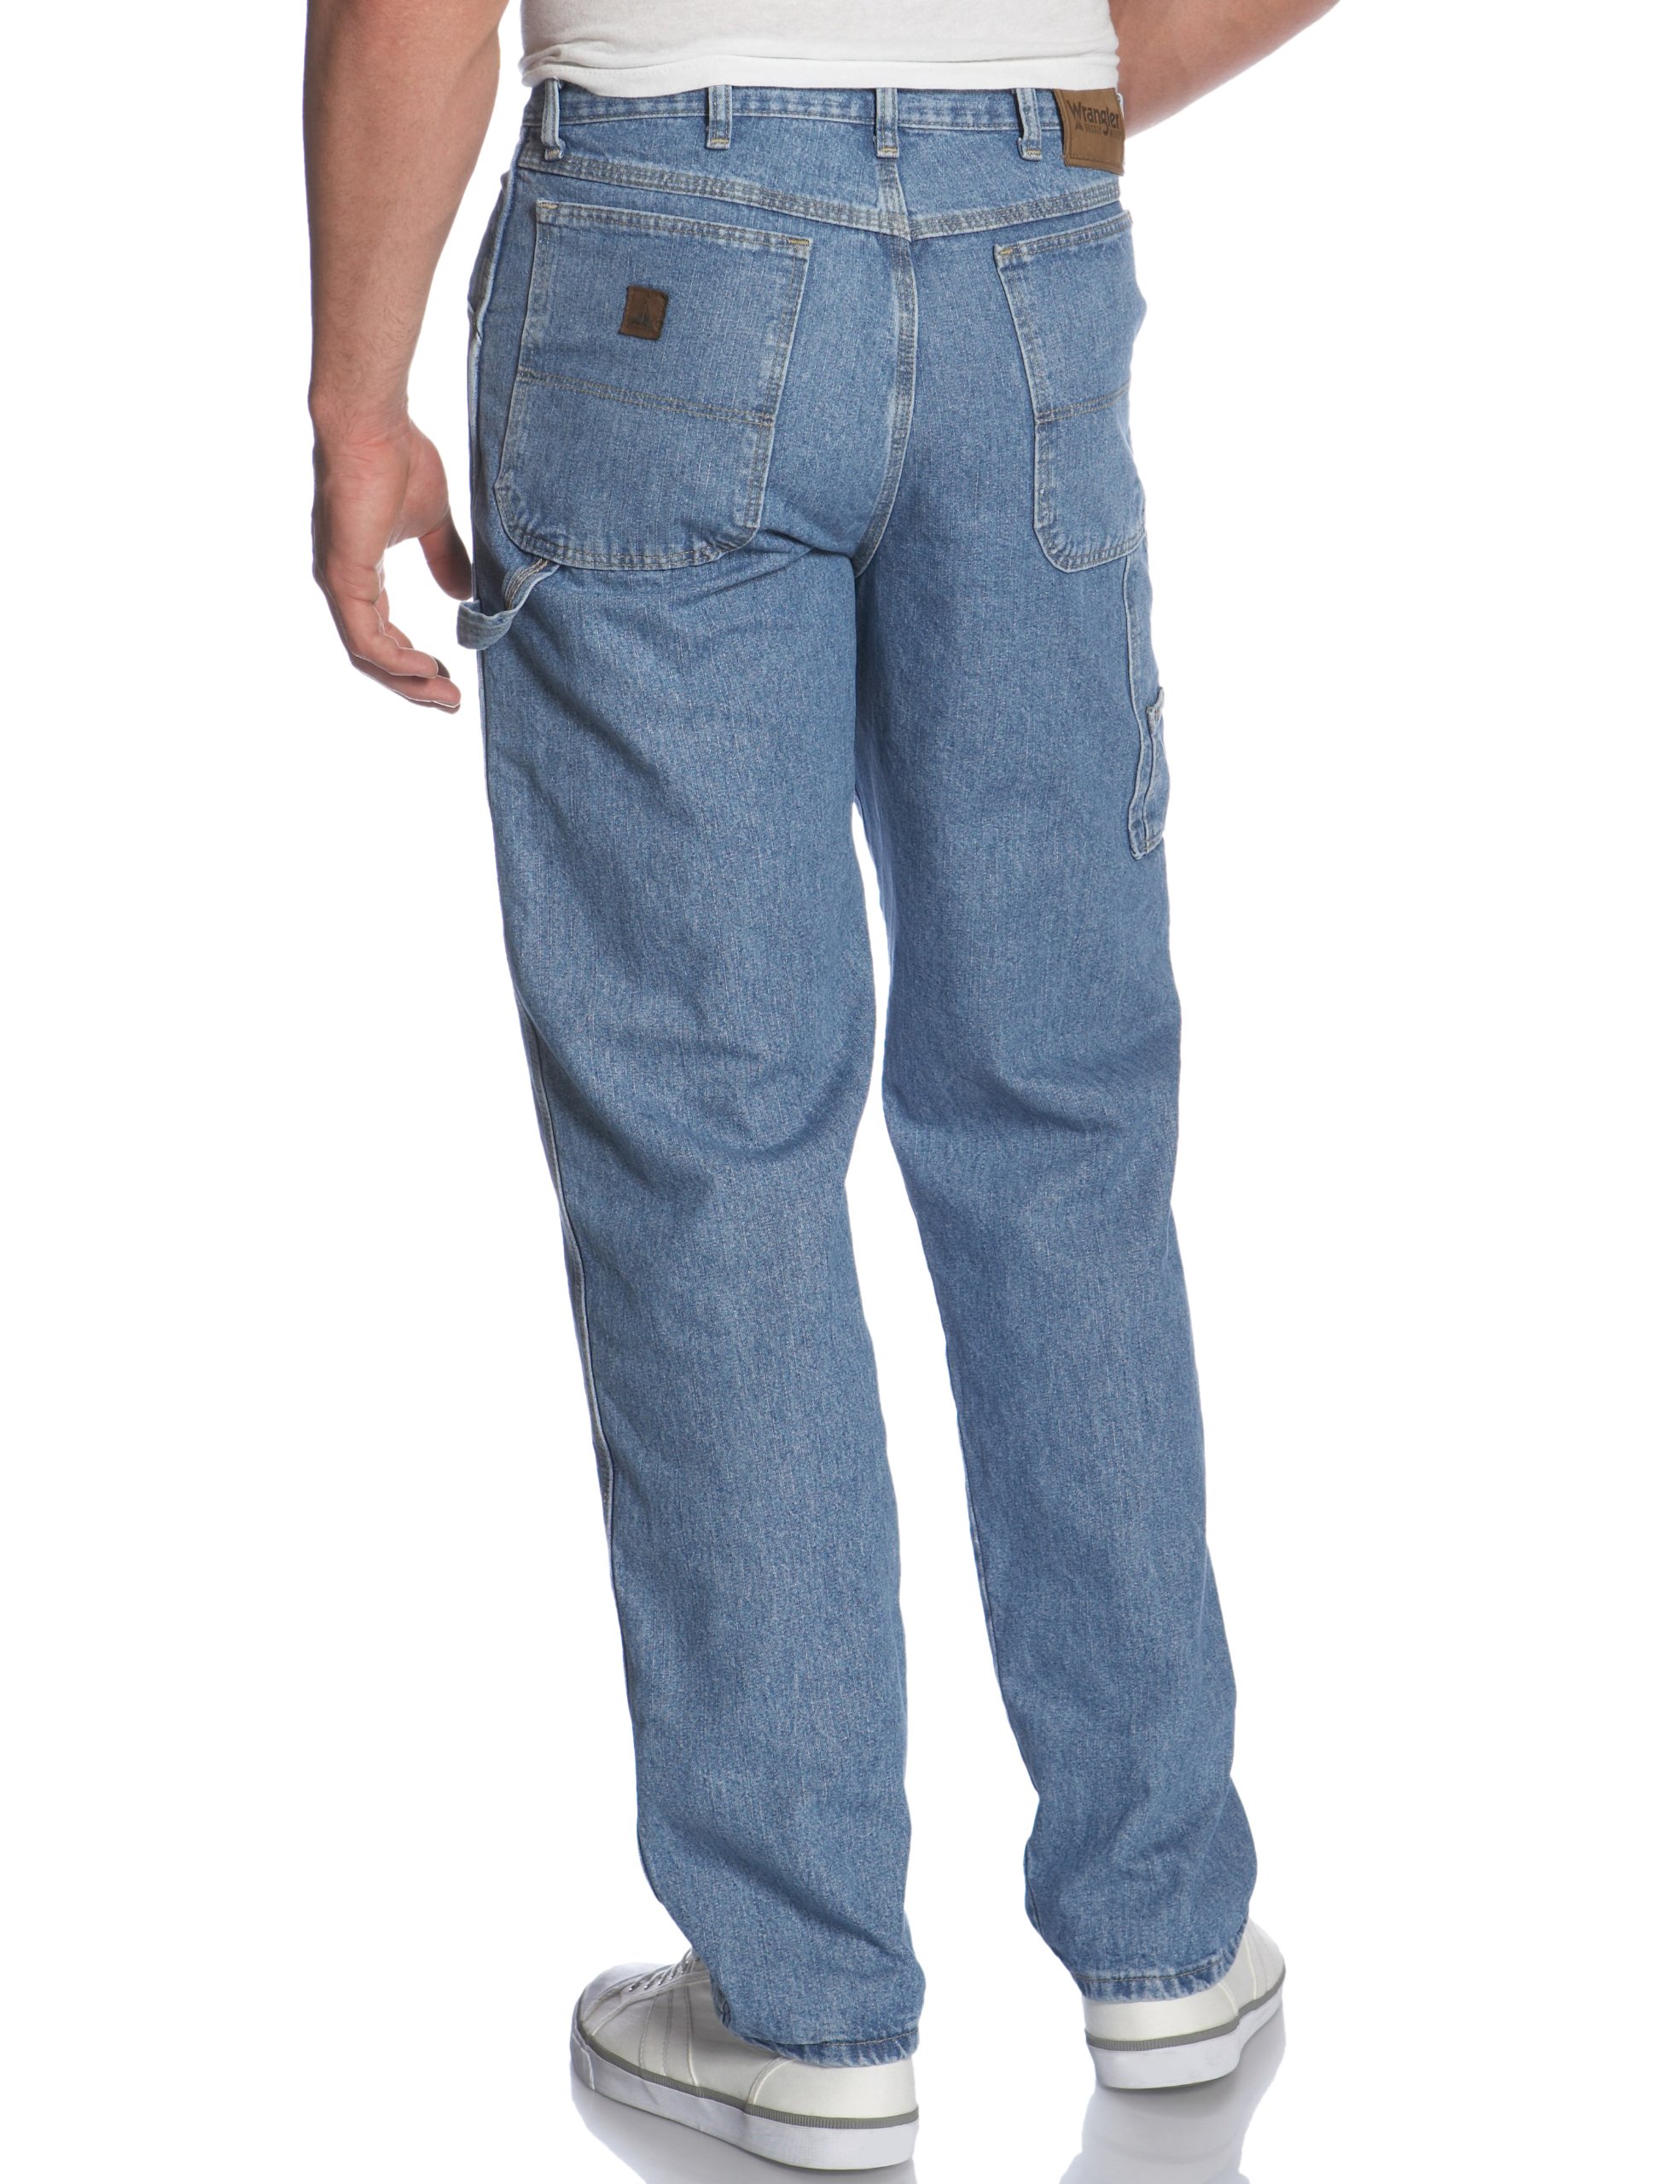 Mua Wrangler Men's Carpenter Jean trên Amazon Mỹ chính hãng 2023 |  Giaonhan247